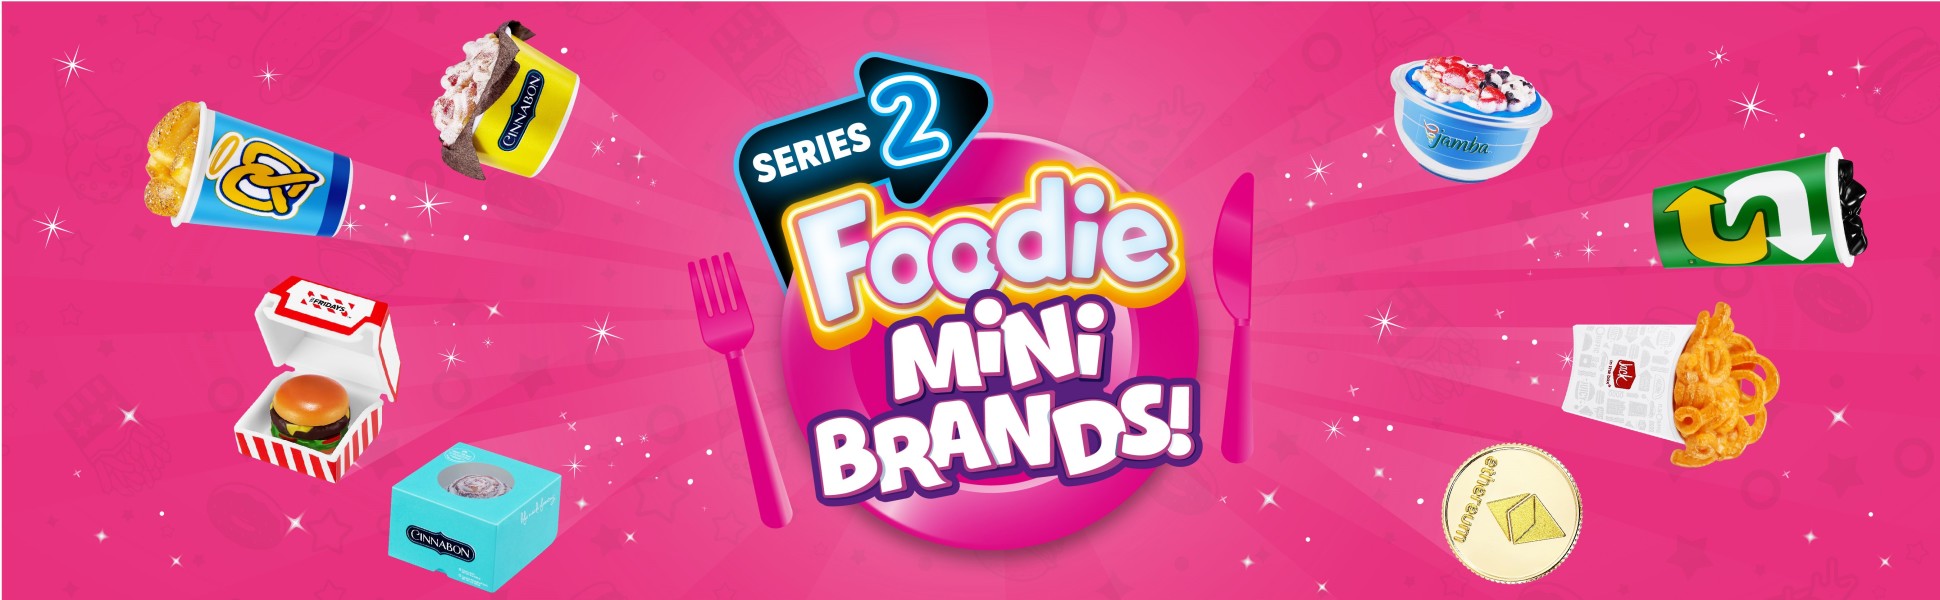 The Best Foodie Mini Brands Series 2 Miniature! #minibrands